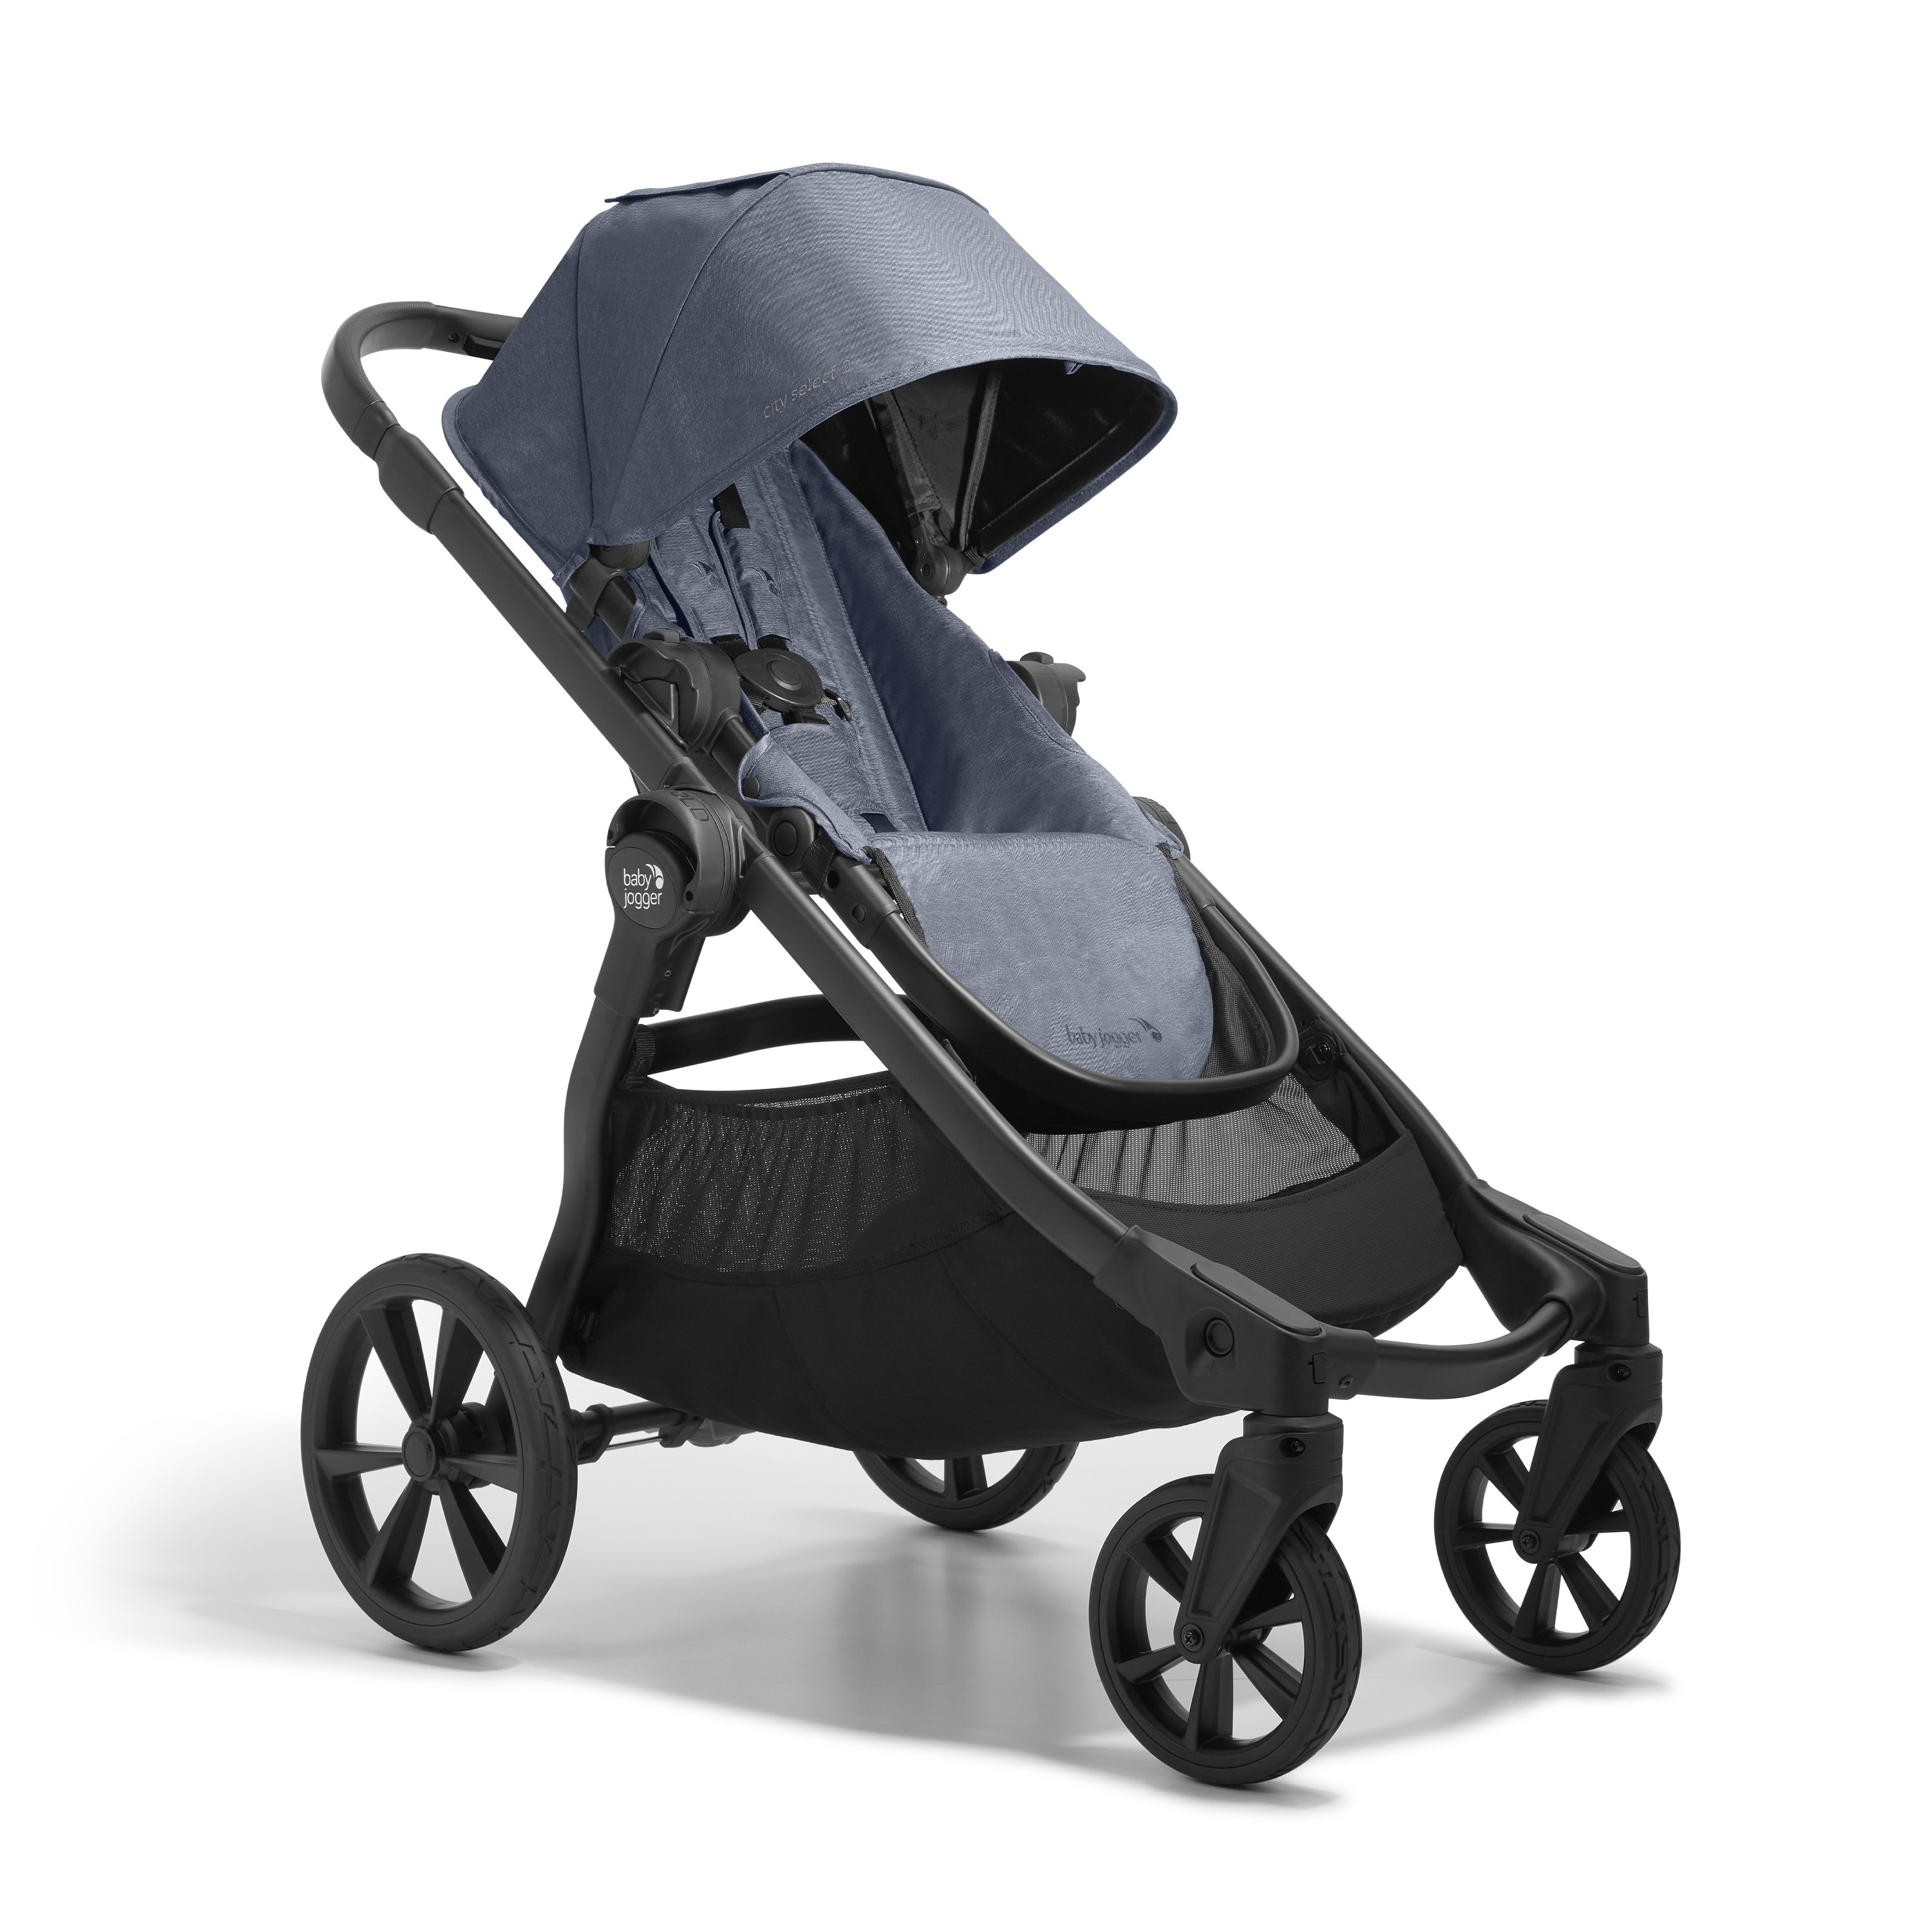 Baby city 2 stroller | Baby